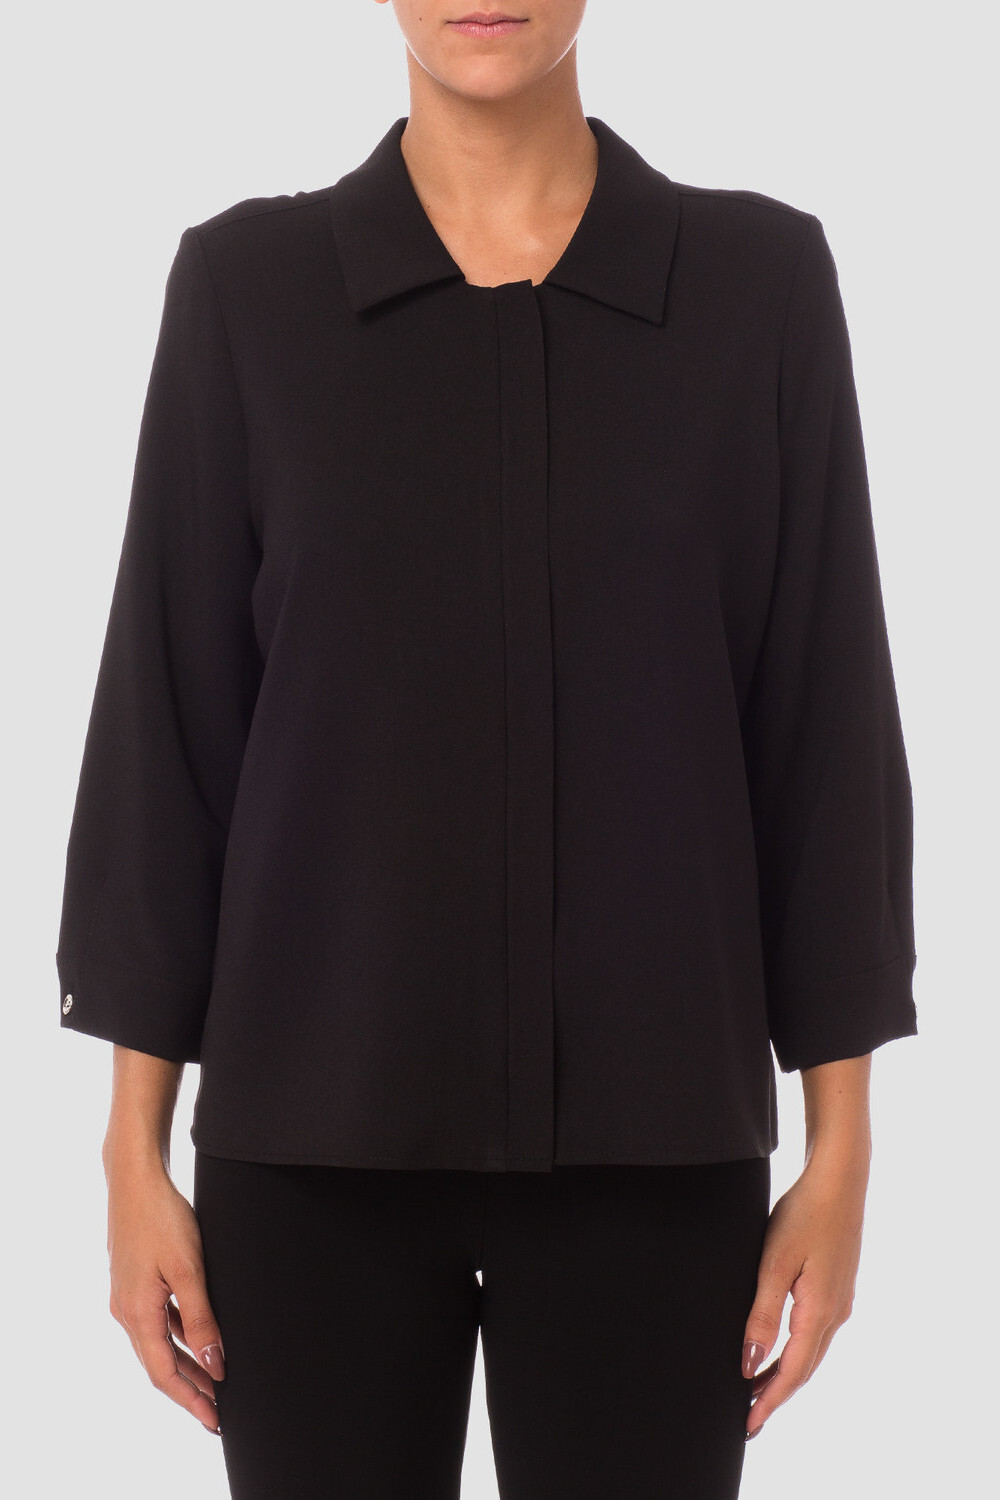 Joseph Ribkoff blouse style 173574. Black